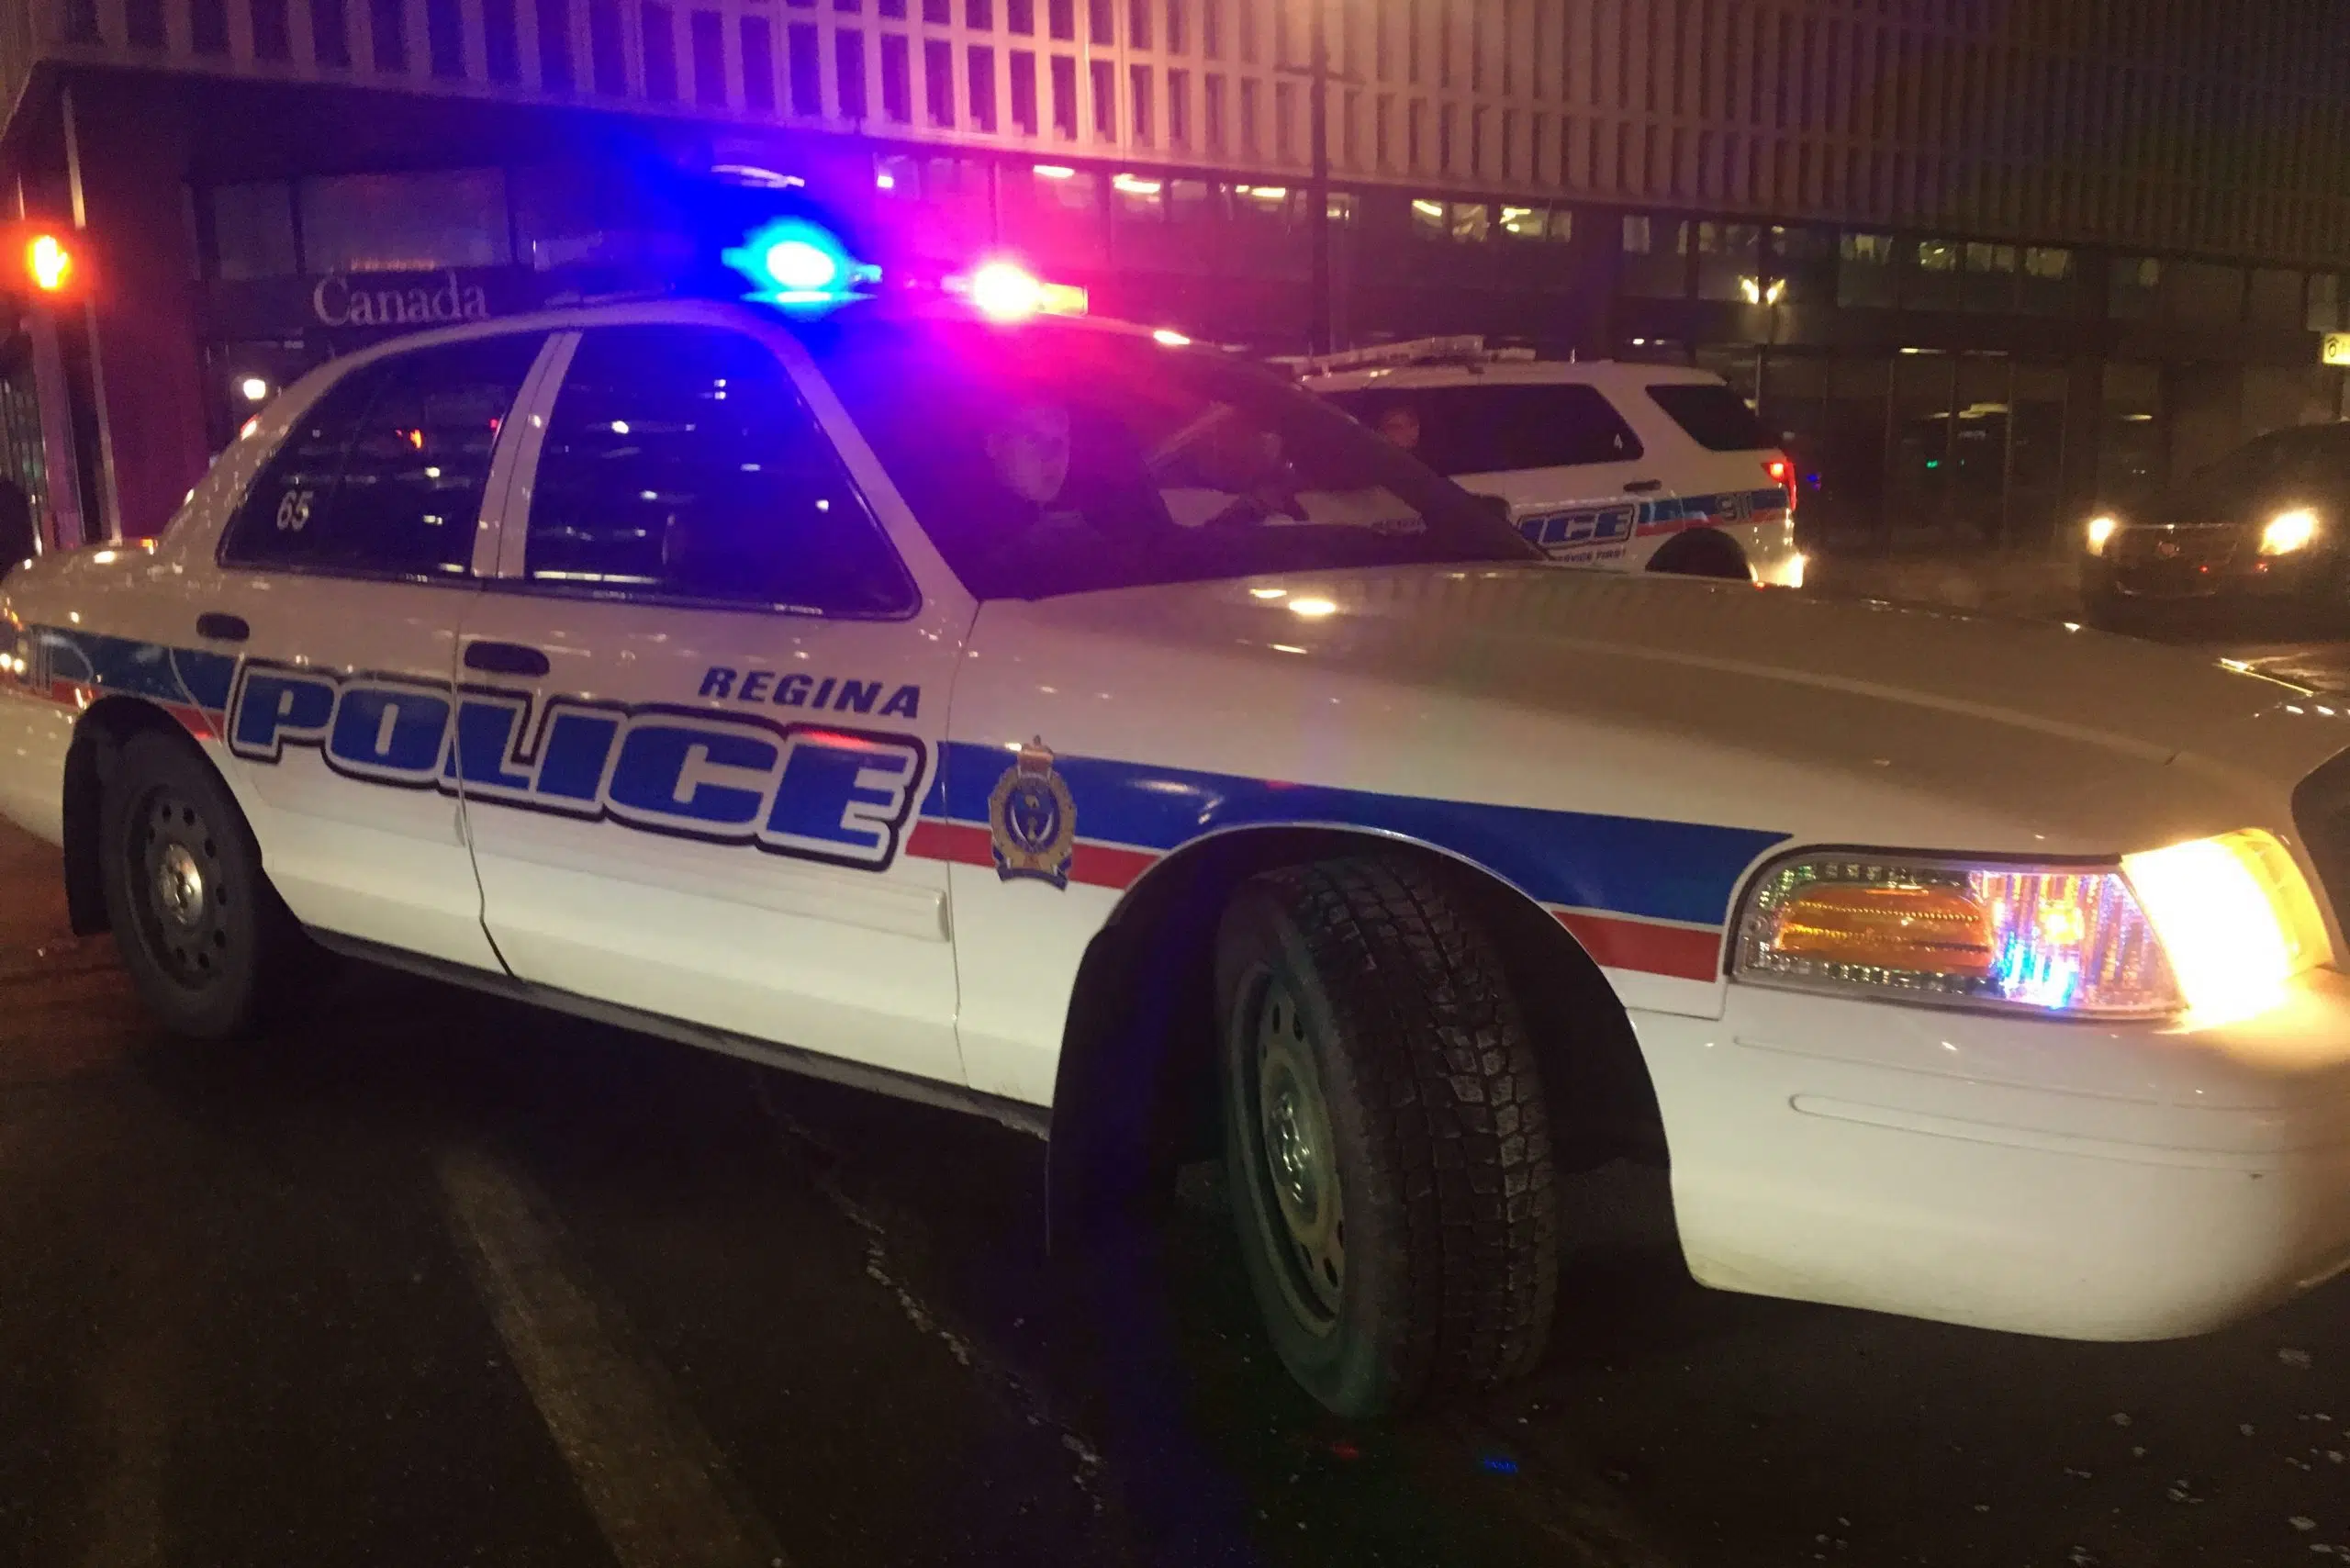 Regina police, coroner investigating man's death